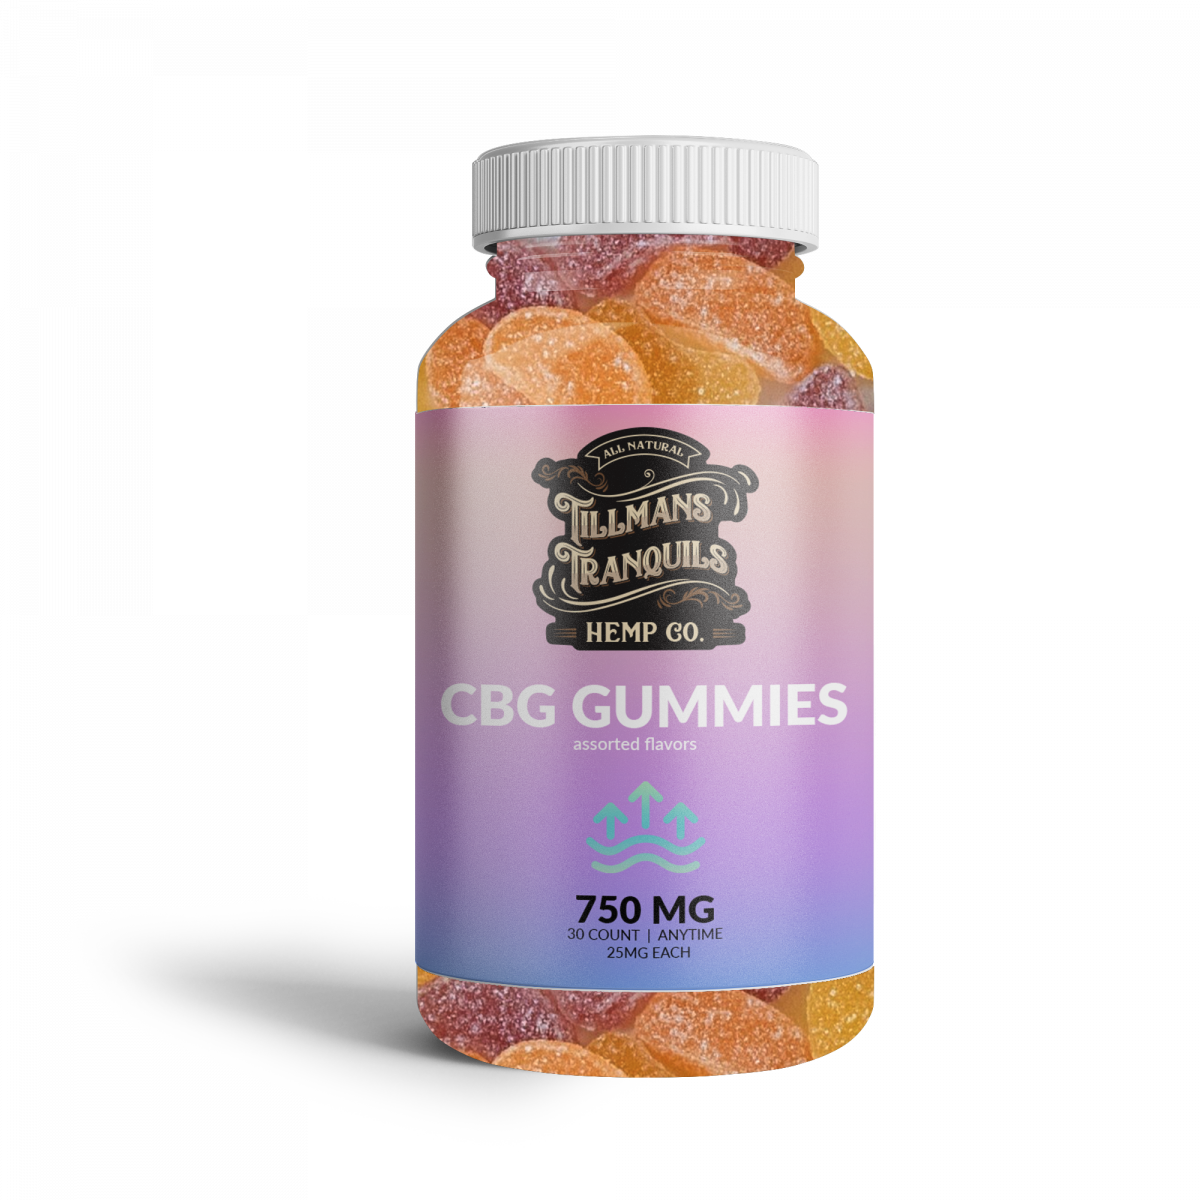 Tillmans Tranquils CBG Gummies (Cannabigerol) 750mg – Anytime Formula Best Sales Price - Gummies